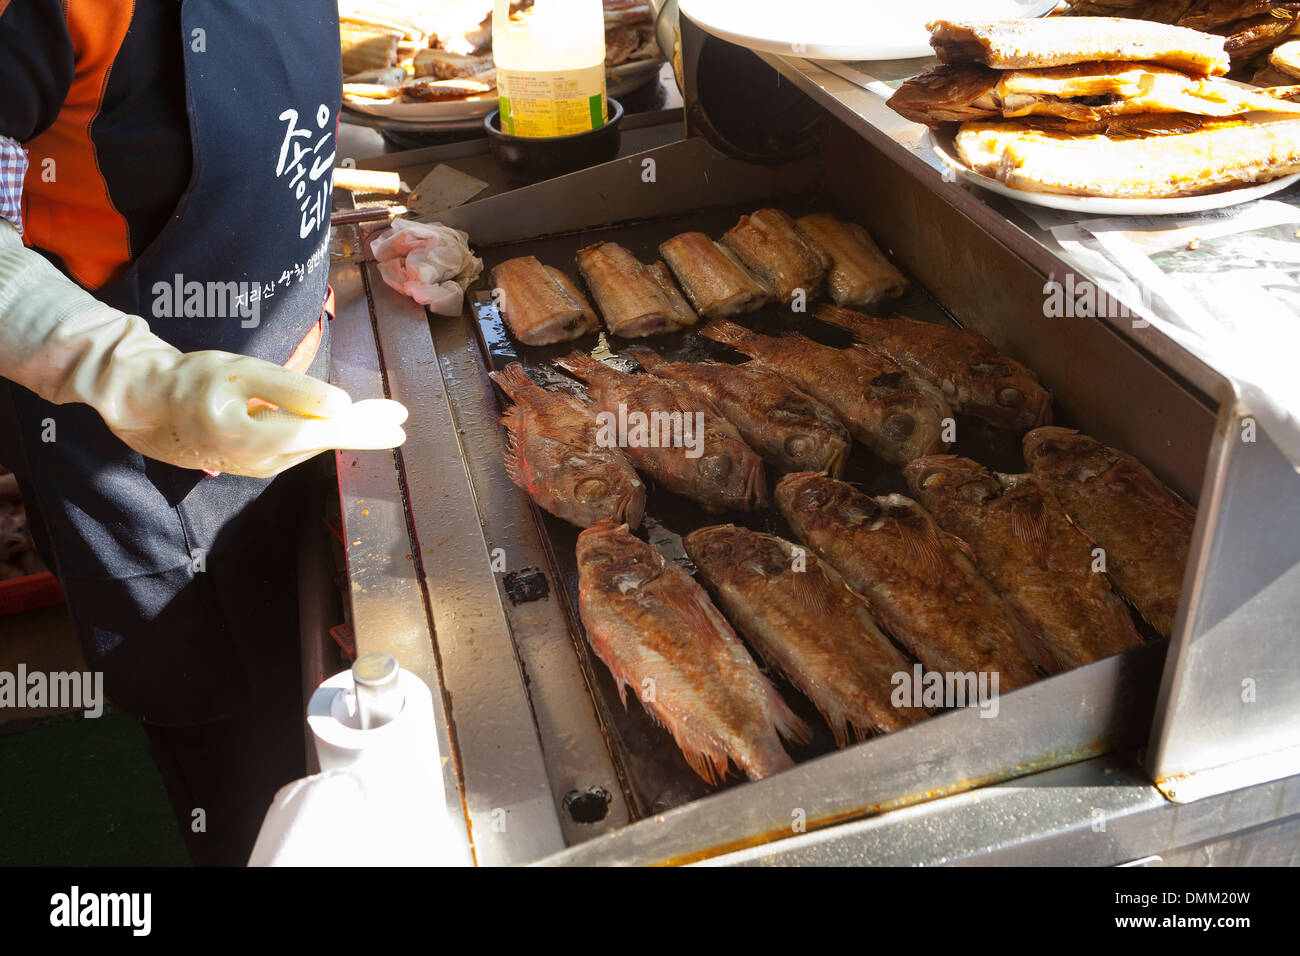 Woman frying fresh whole fish on griddle at Jagalchi shijang (traditional outdoor market) - Busan, South Korea Stock Photo